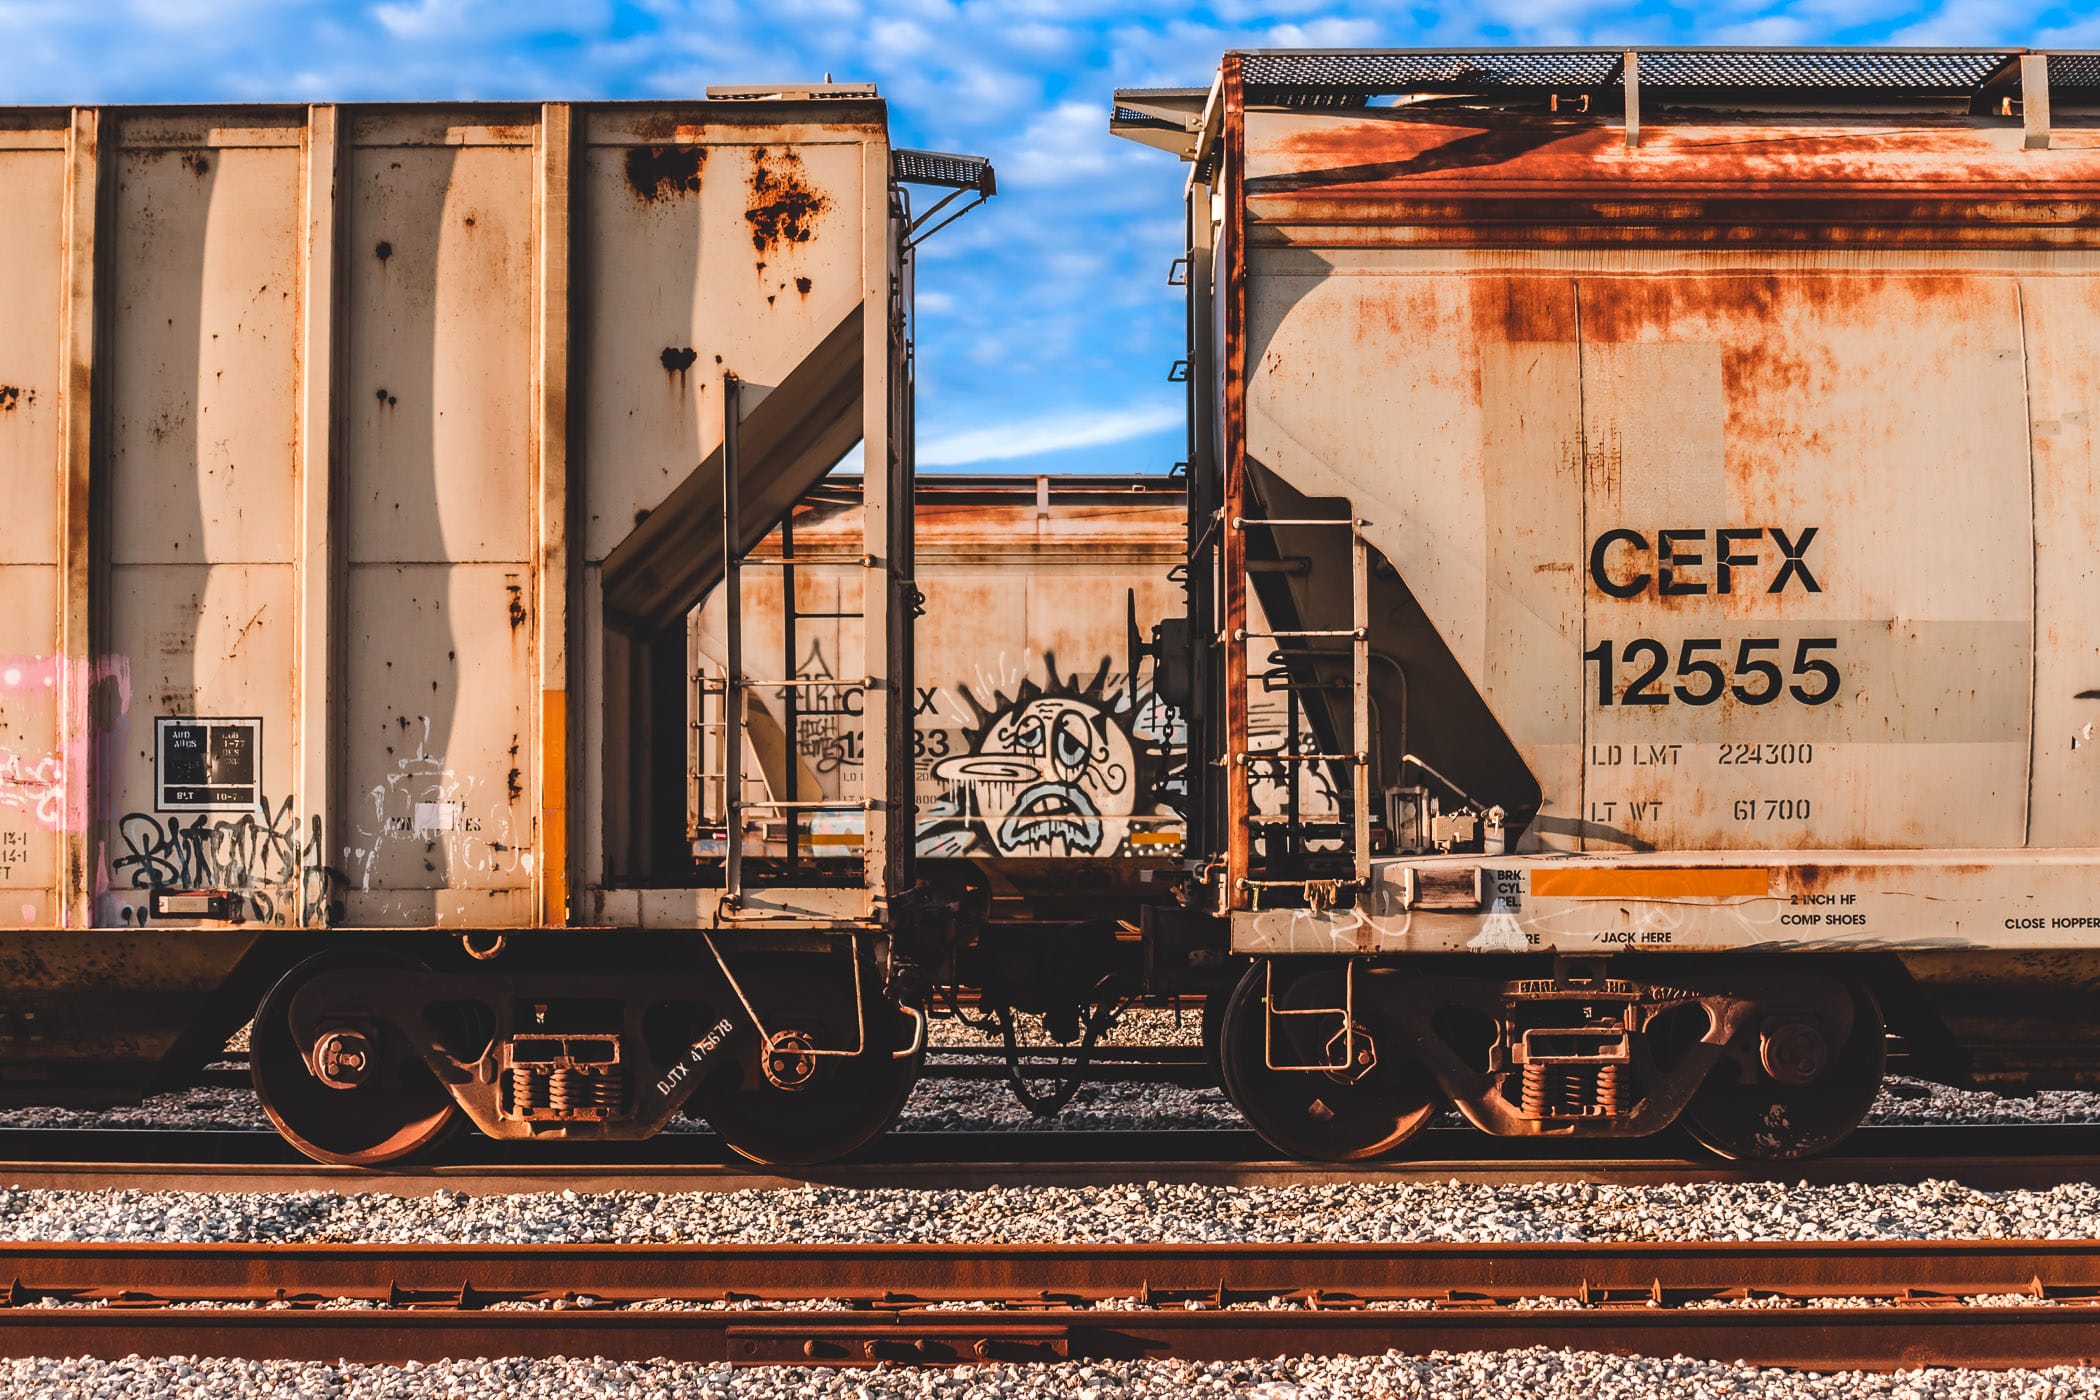 Graffiti spotted on a railcar in a Galveston, Texas, railyard.